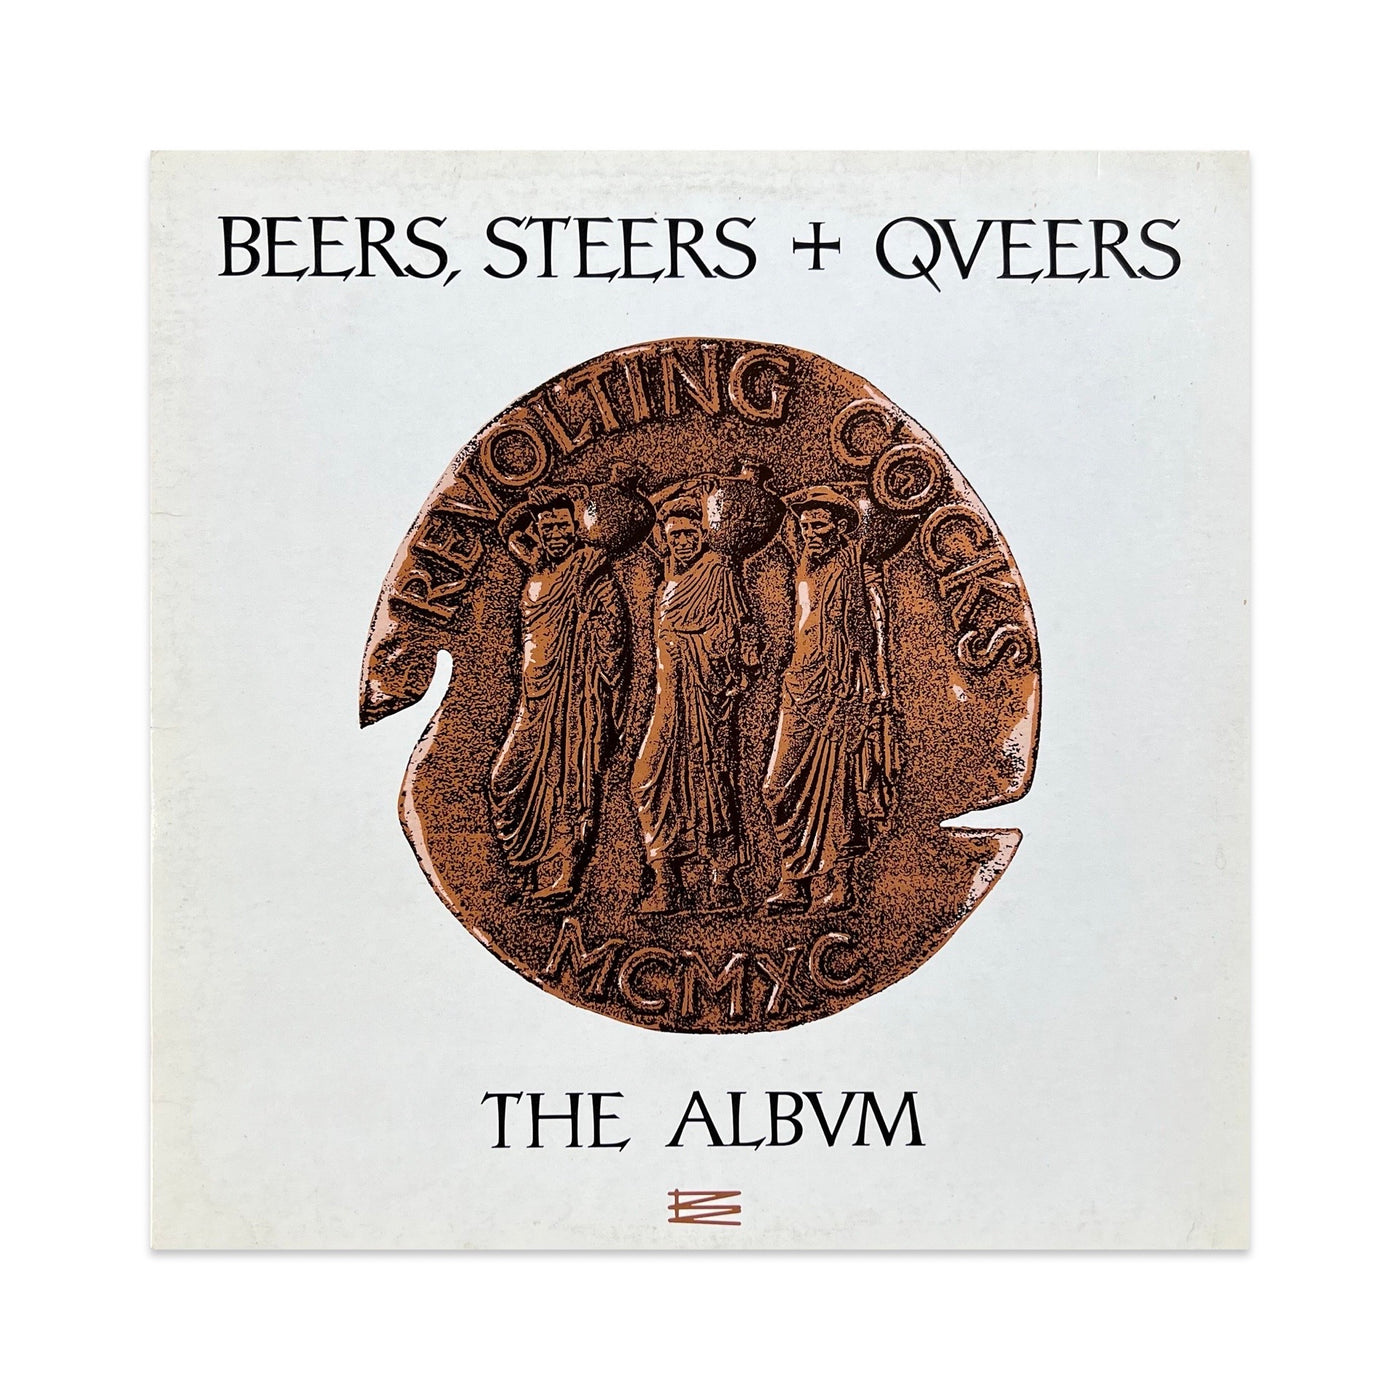 Revolting Cocks - Beers, Steers + Queers (The Album)